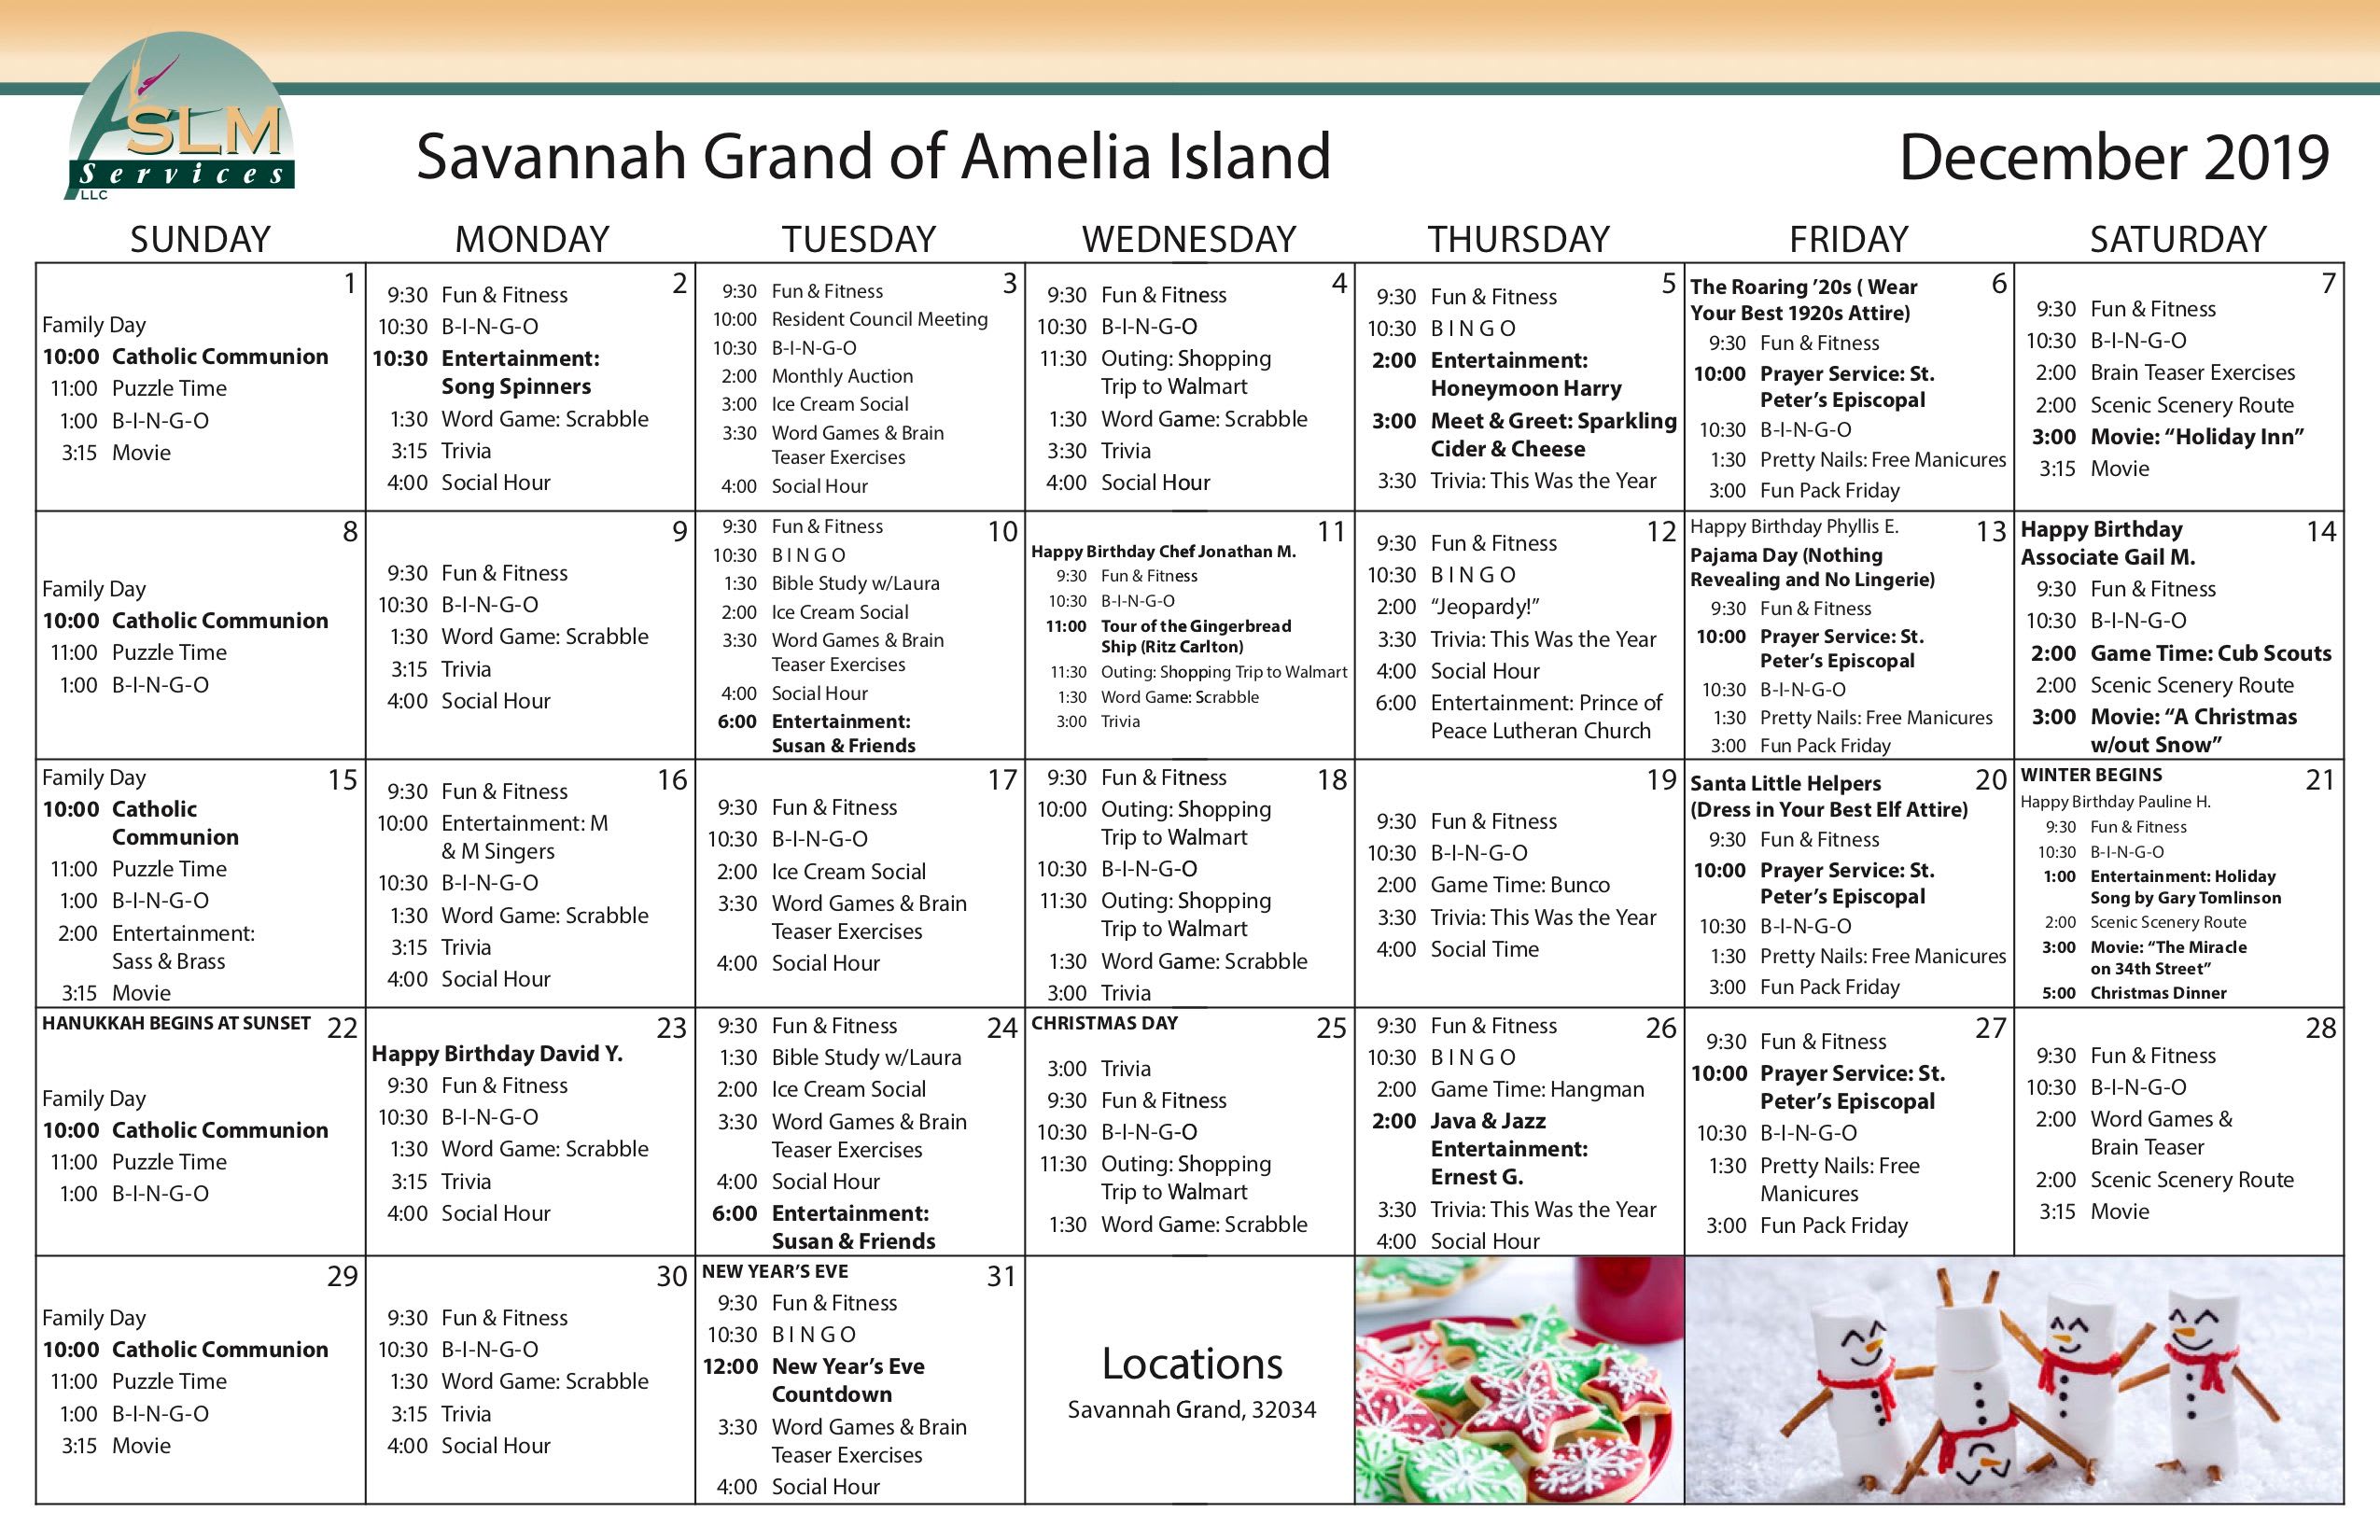 Activities & Events at Savannah Grand of Amelia Island